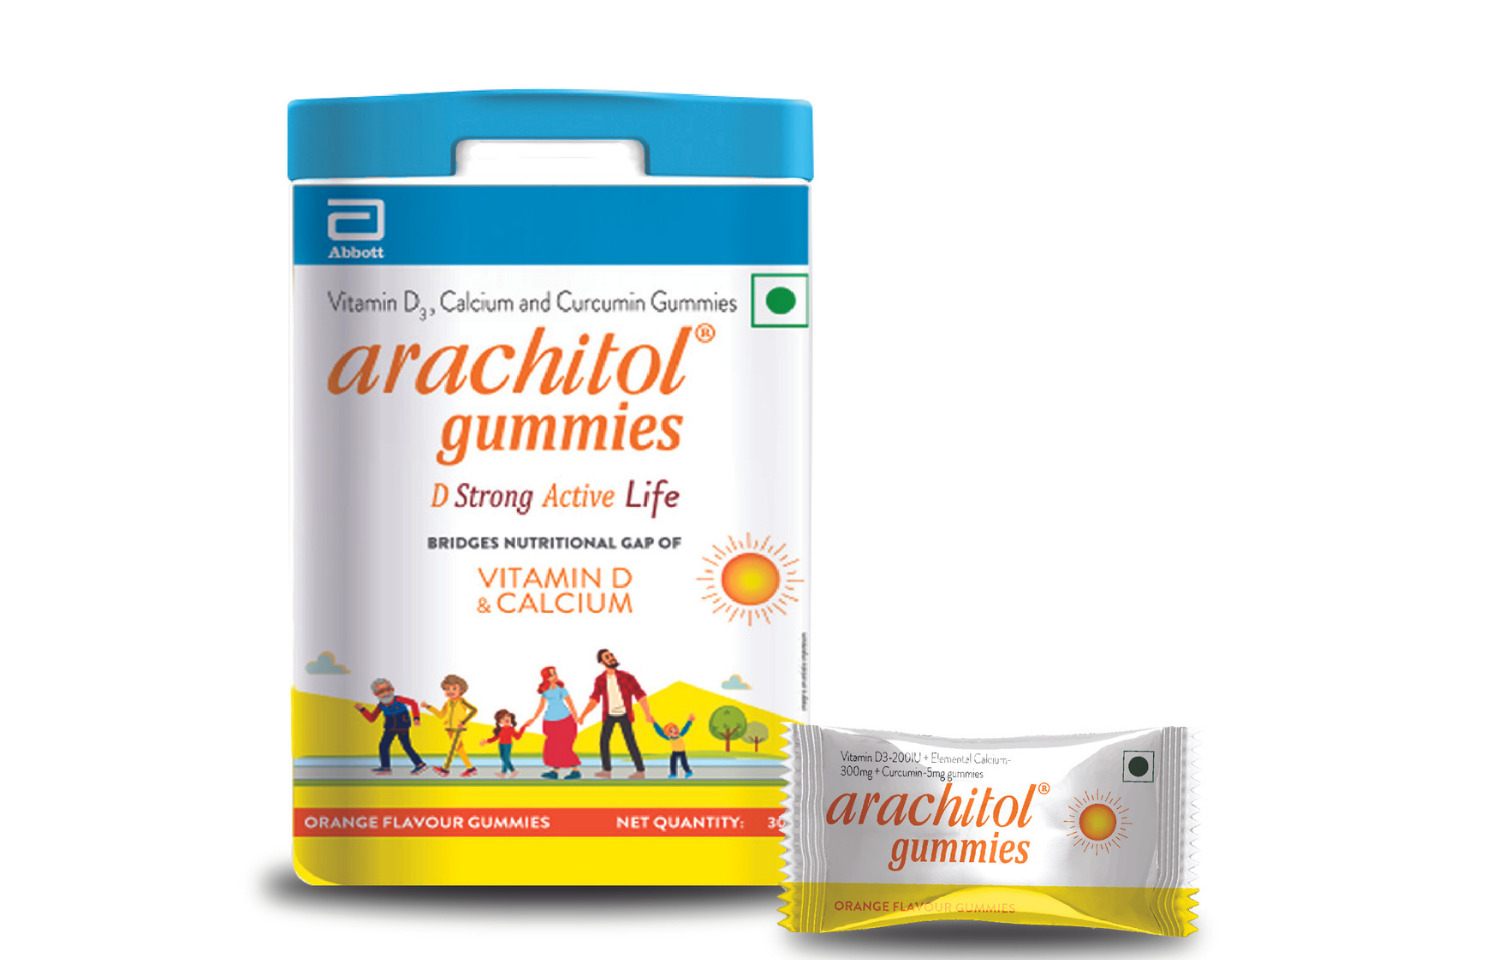 Abbott Launches Arachitol Gummies in India to Address Vitamin D Deficiency